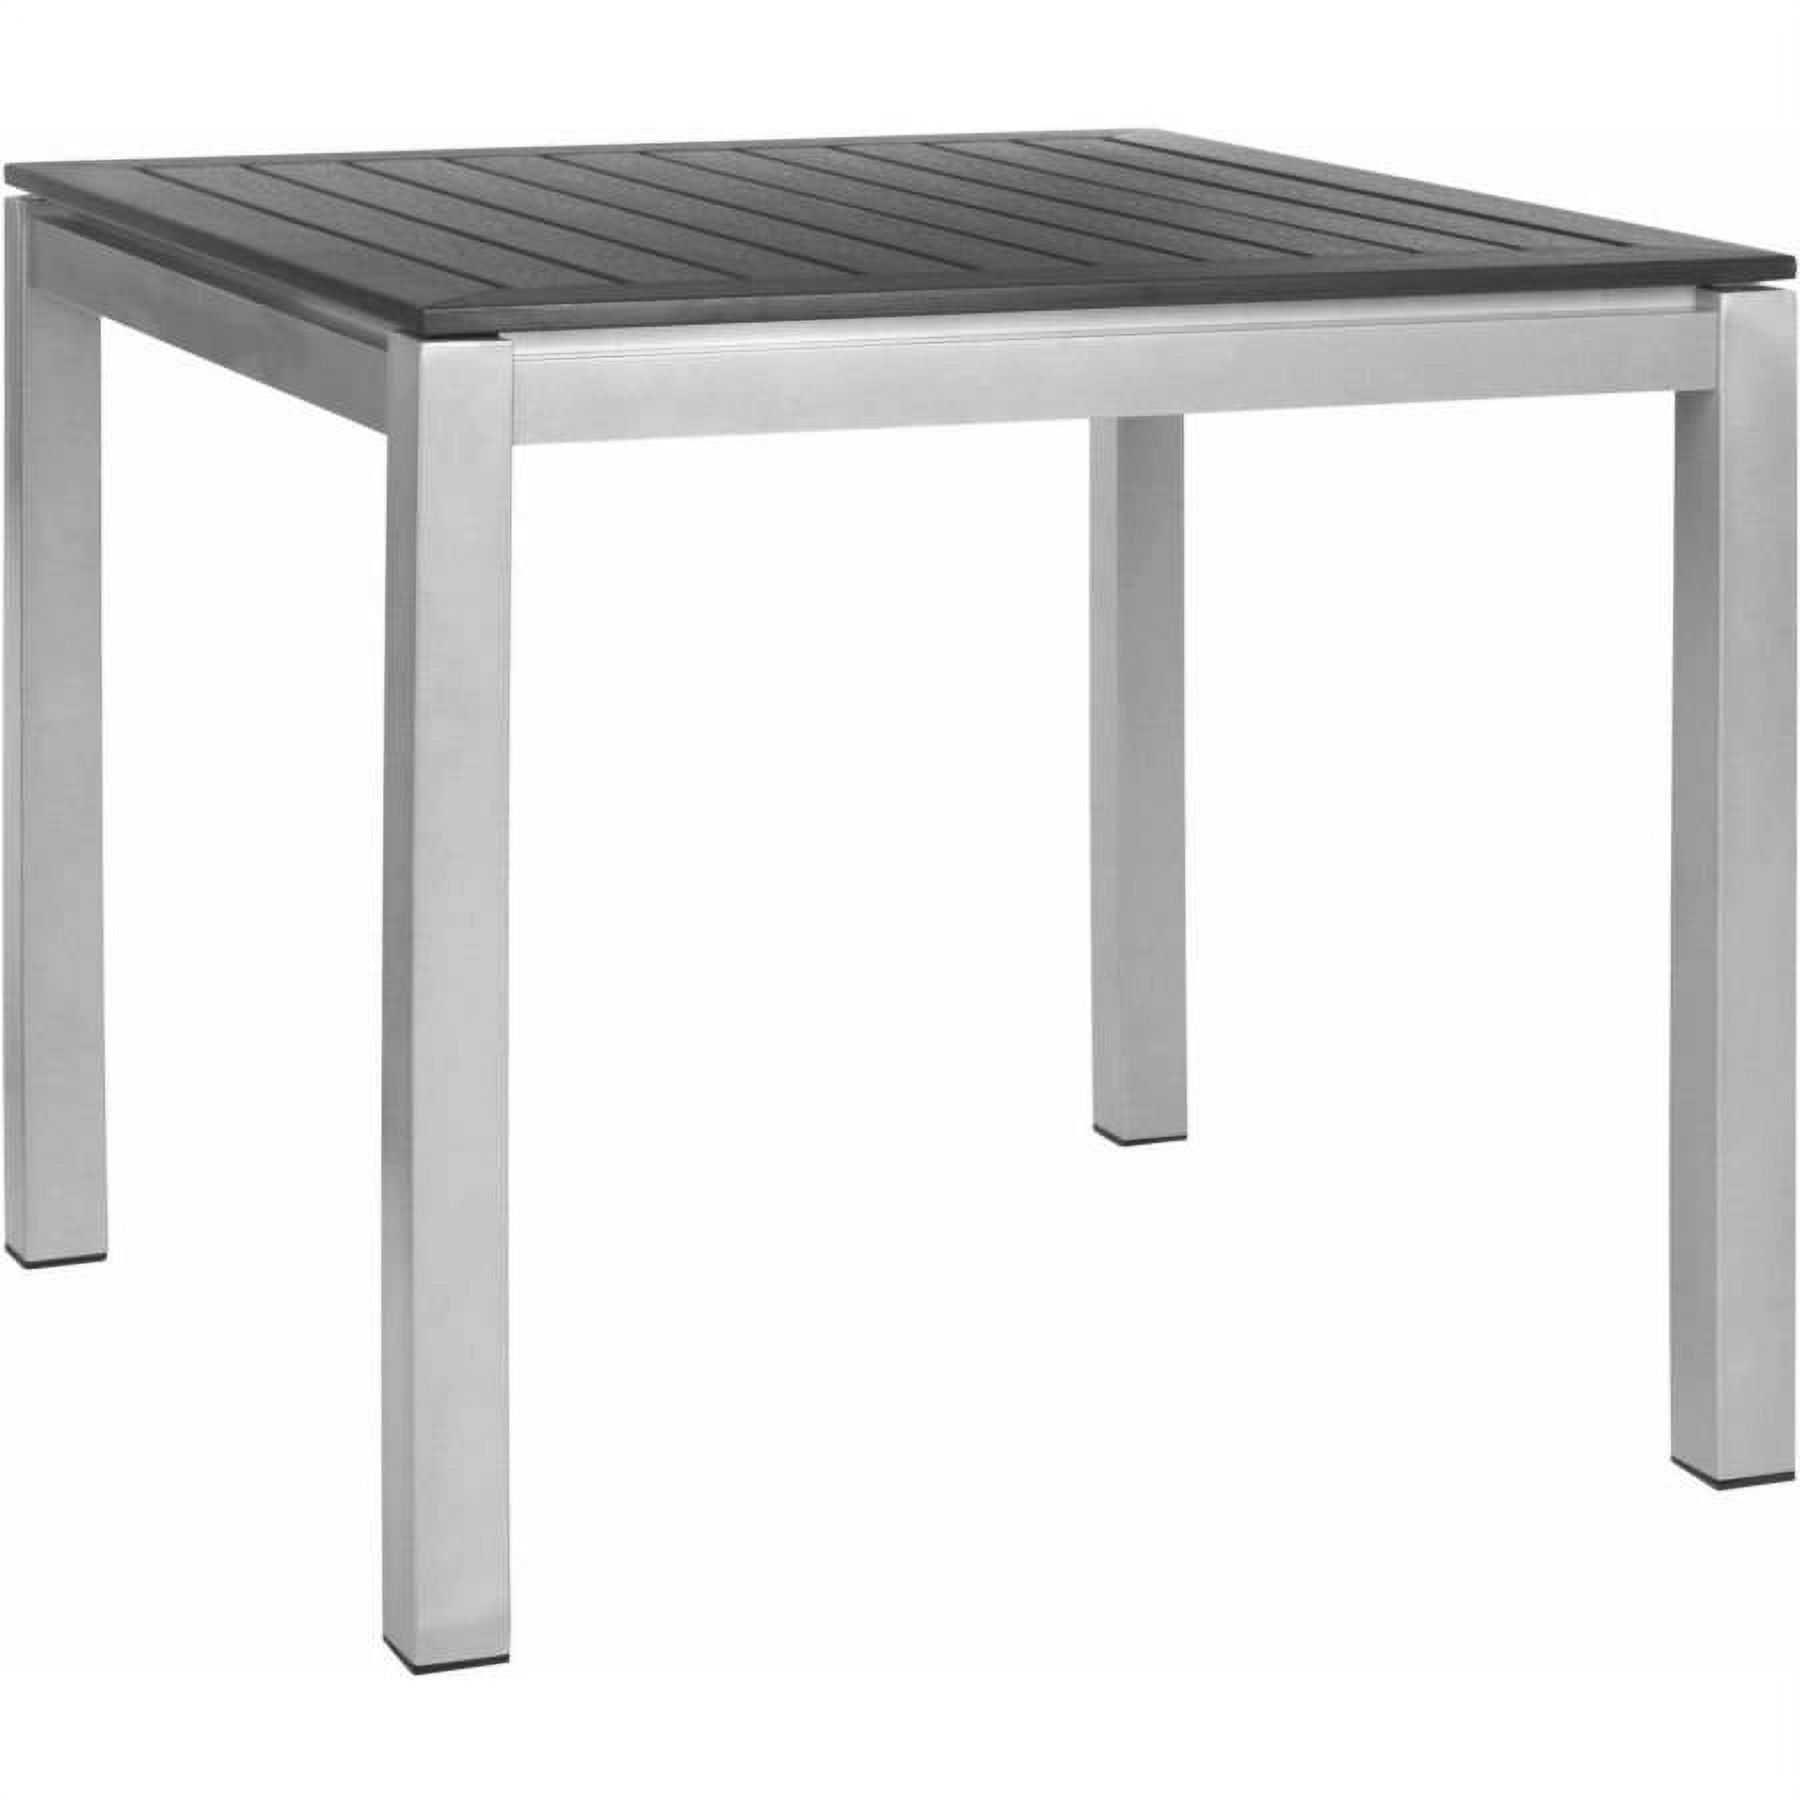 SAFAVIEH Onika Outdoor Patio Square Dining Table, Black/Grey - image 3 of 3